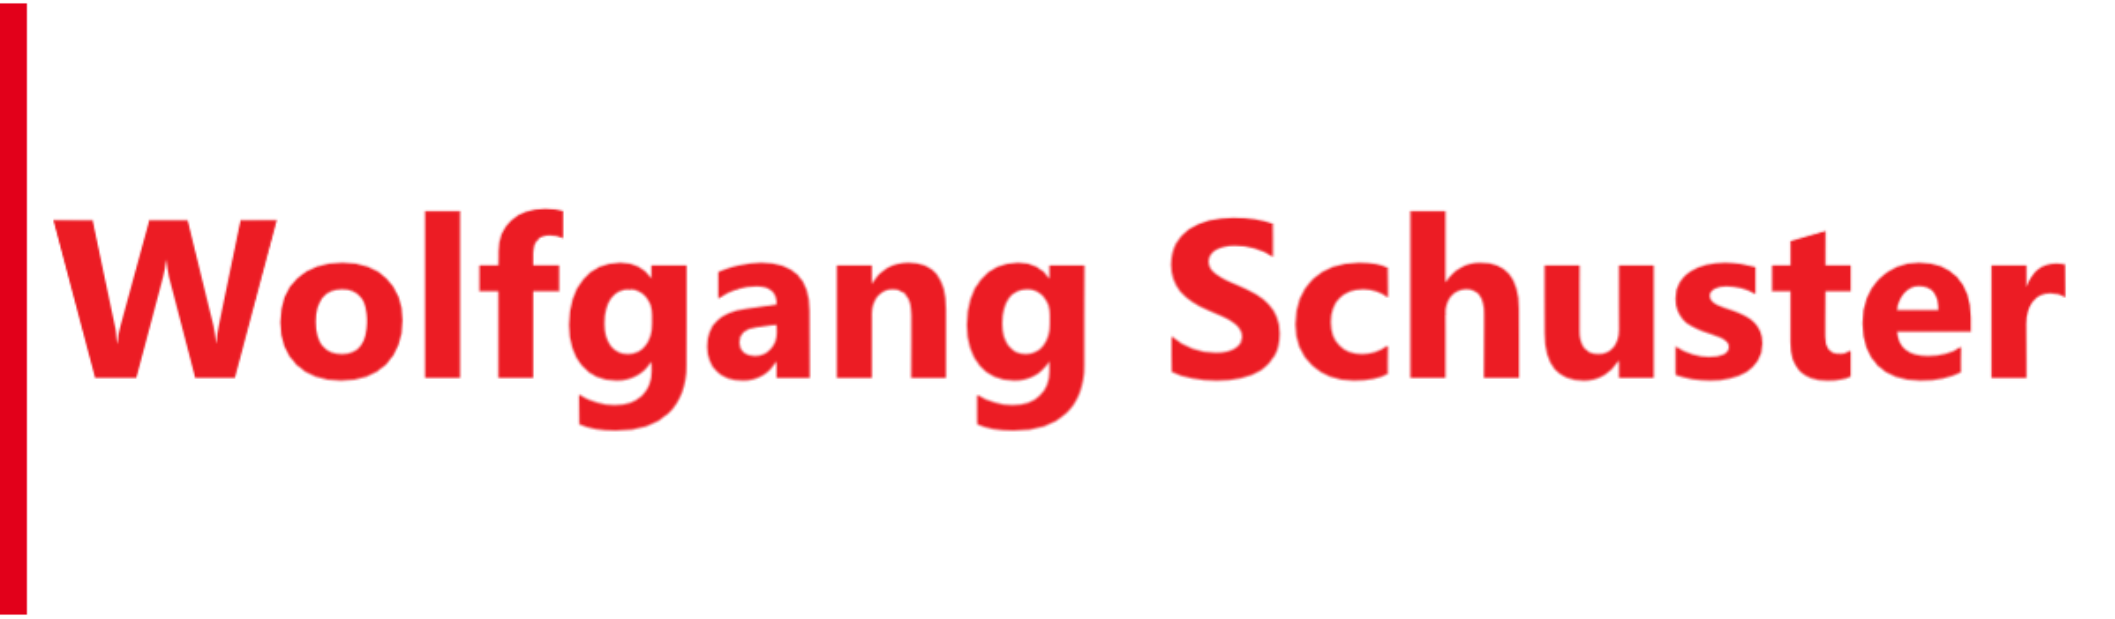 Wolfgang-Schuster-2021 logo